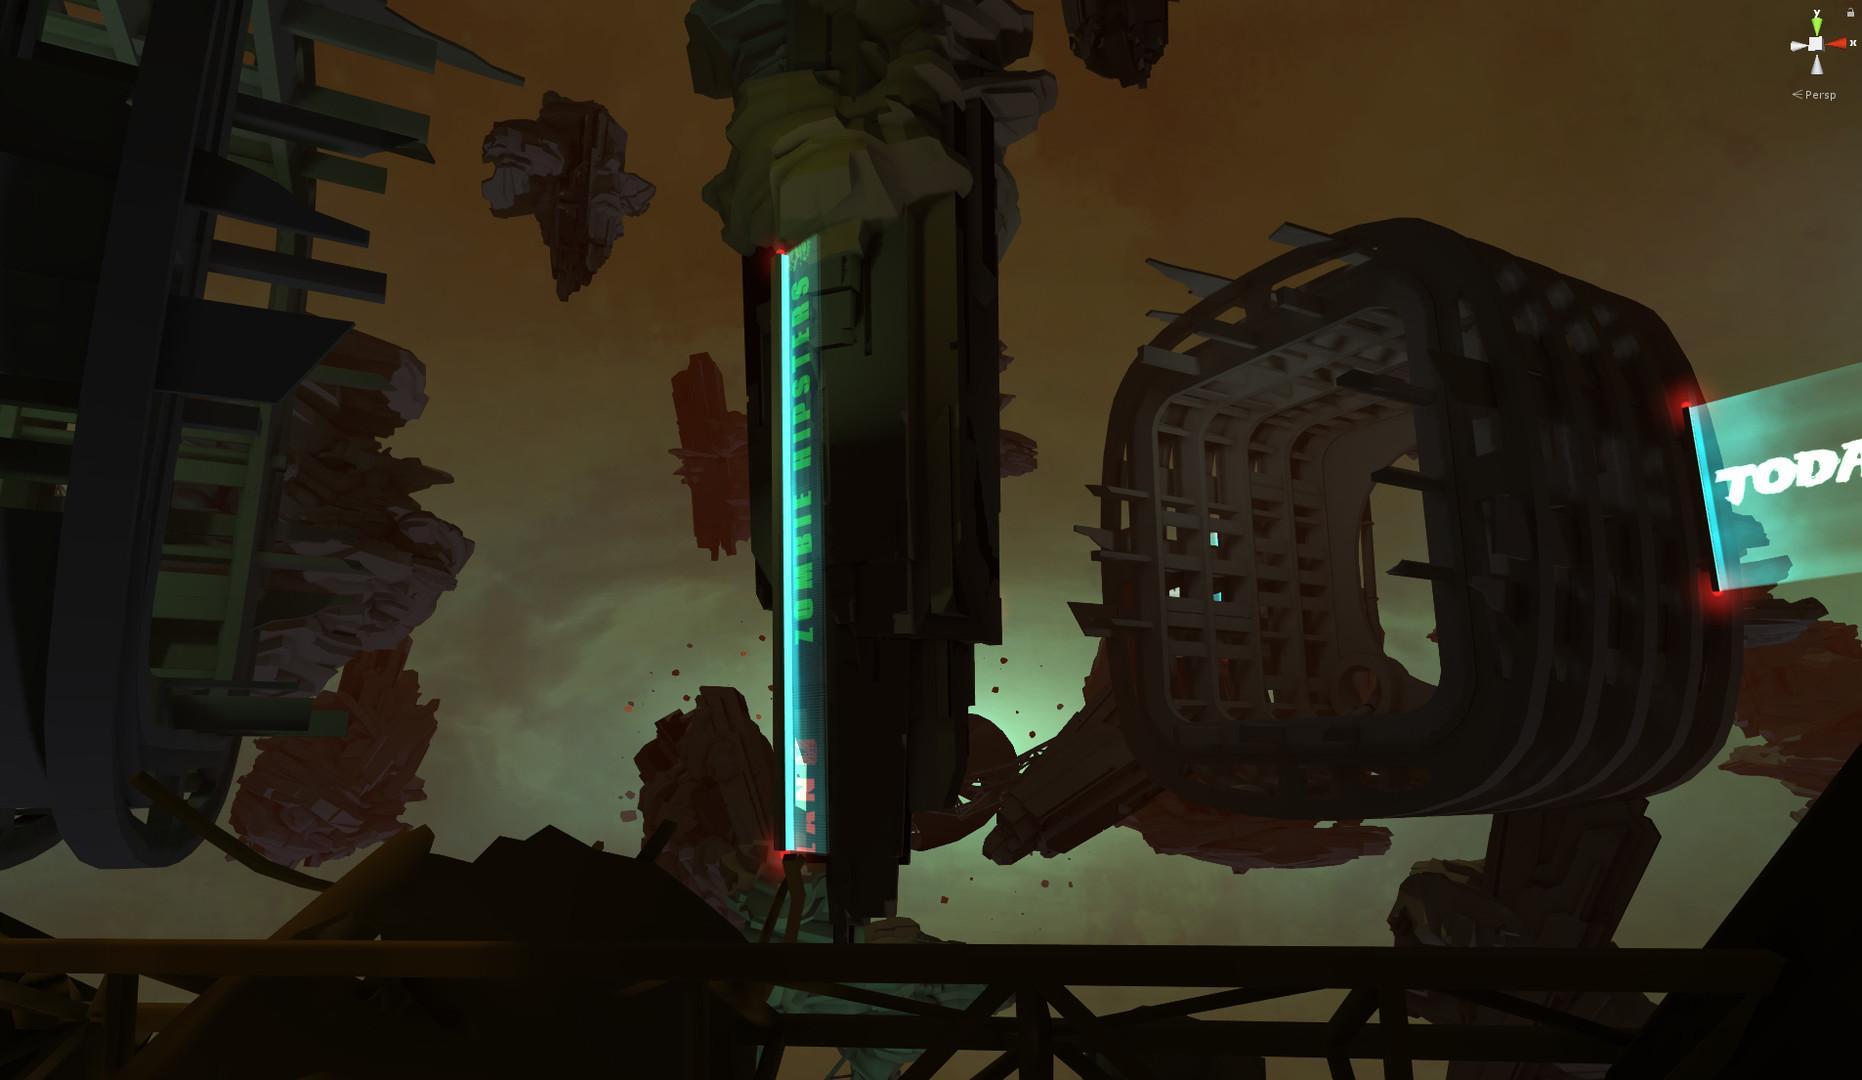 Screenshot №3 from game Galactic Junk League